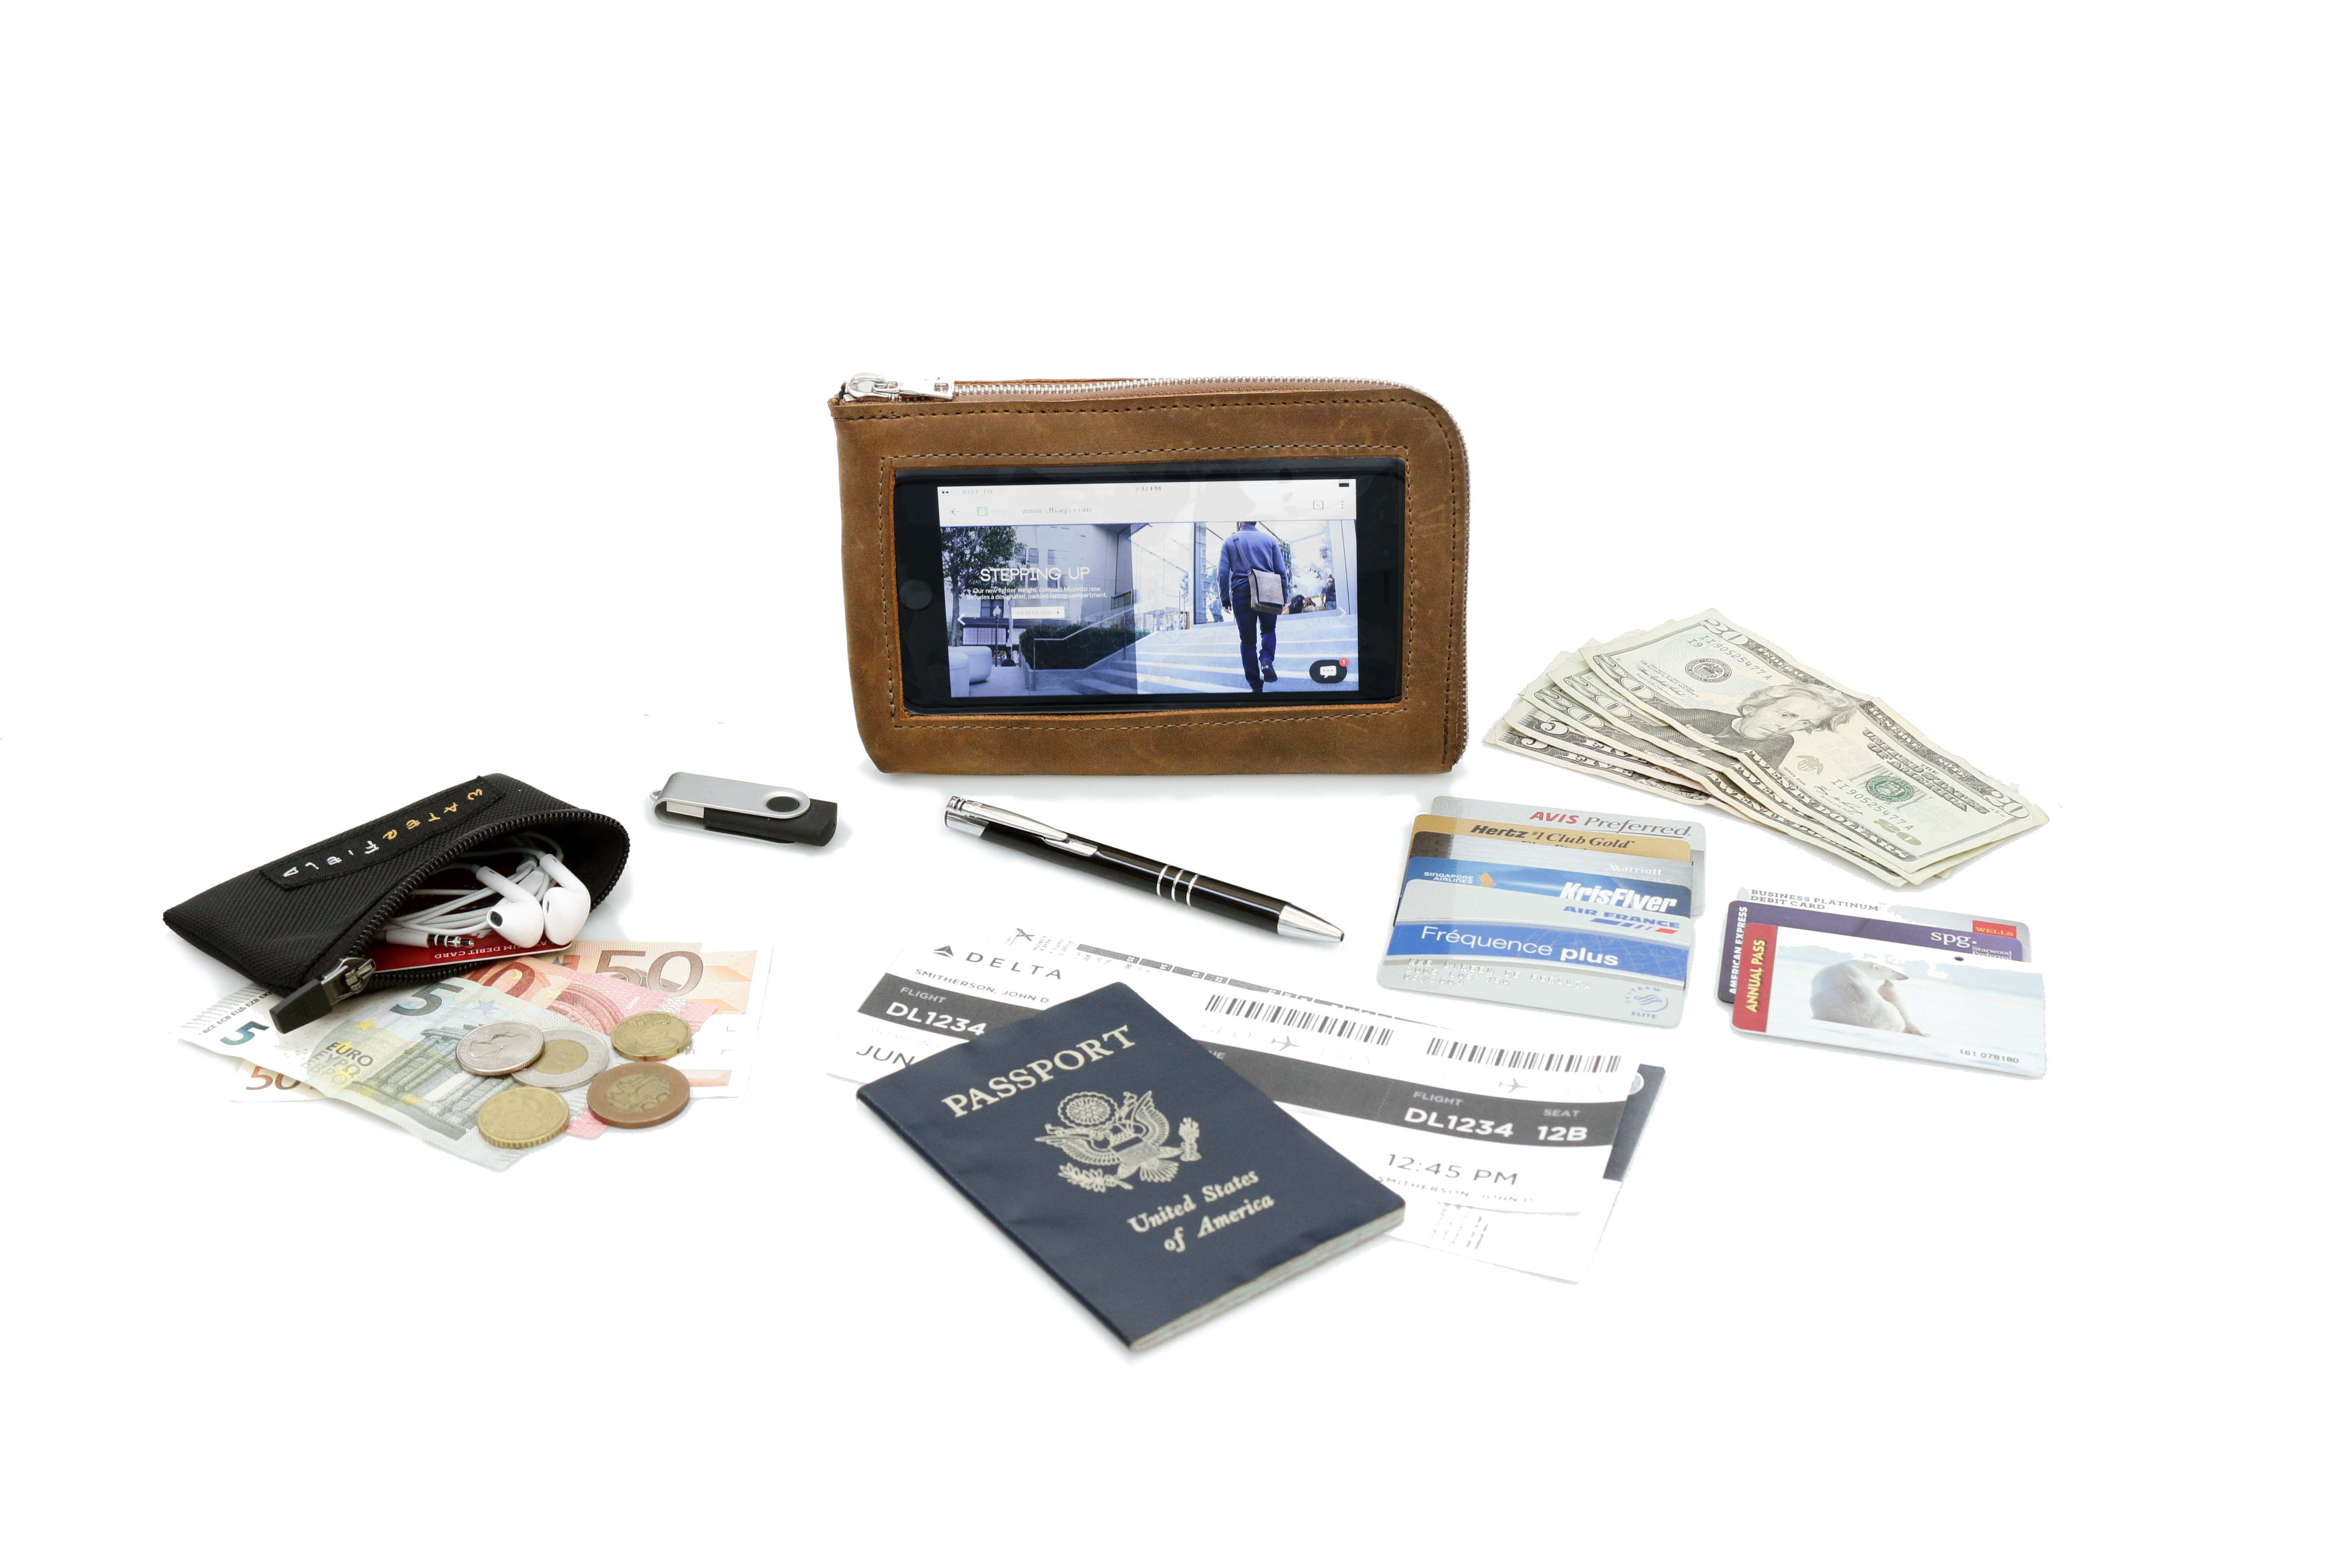 Intrepid iPhone 7 Travel Wallet